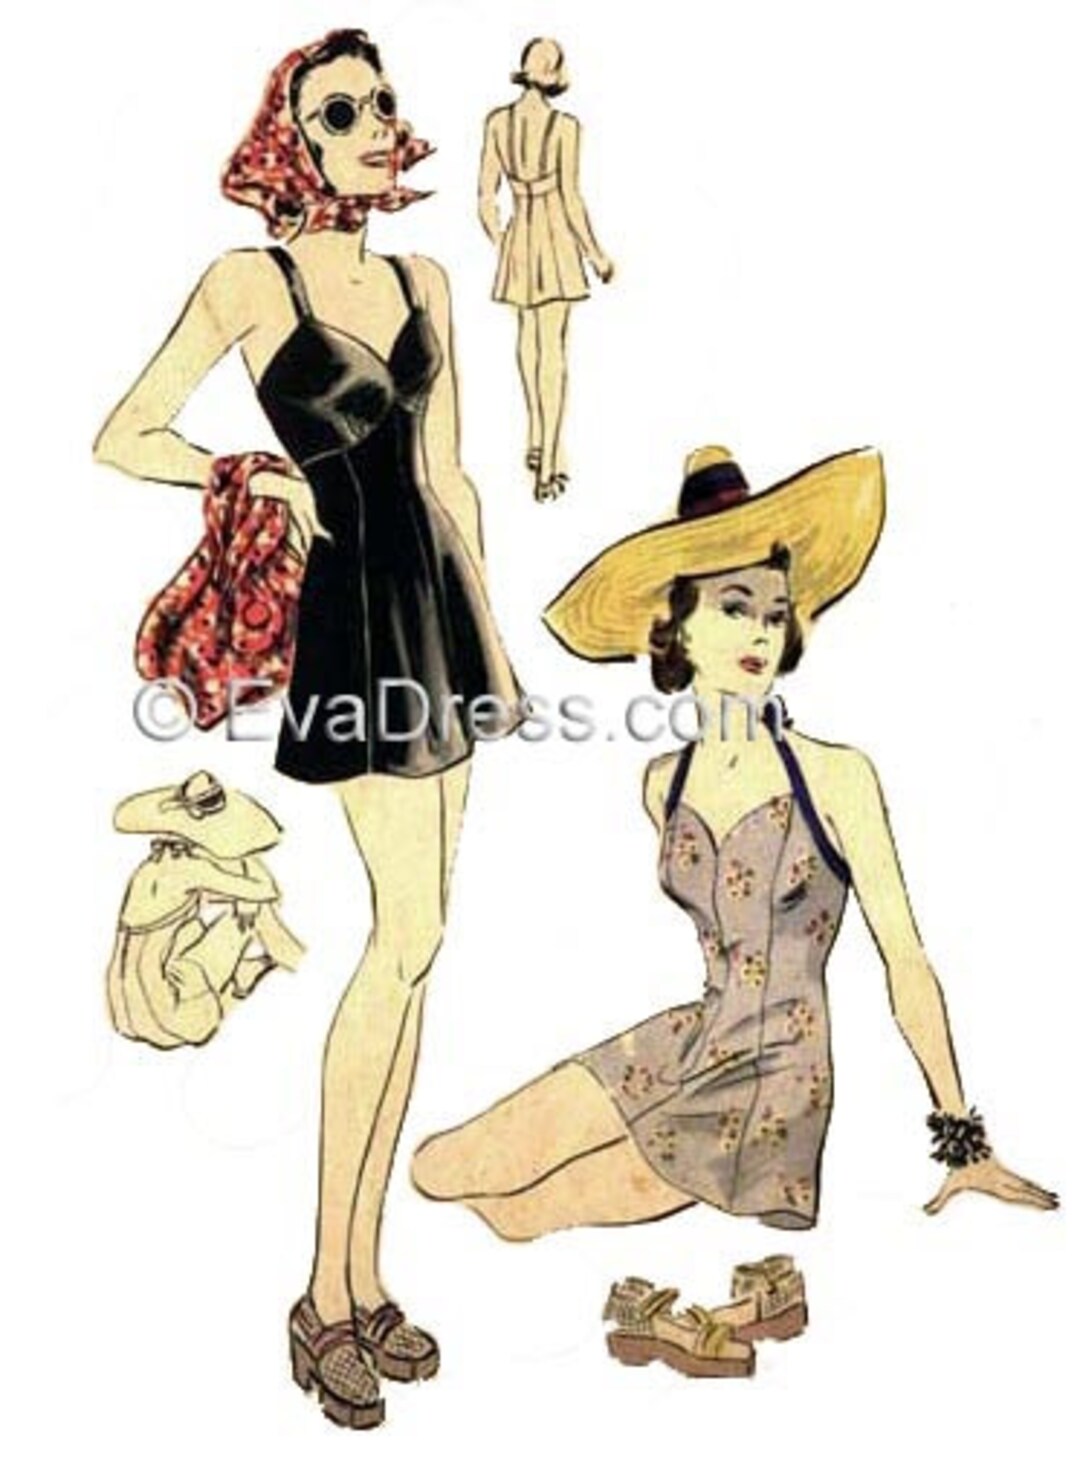 Vintage Lingerie Sewing Pattern / 1930s Slip Dress & Tap Shorts